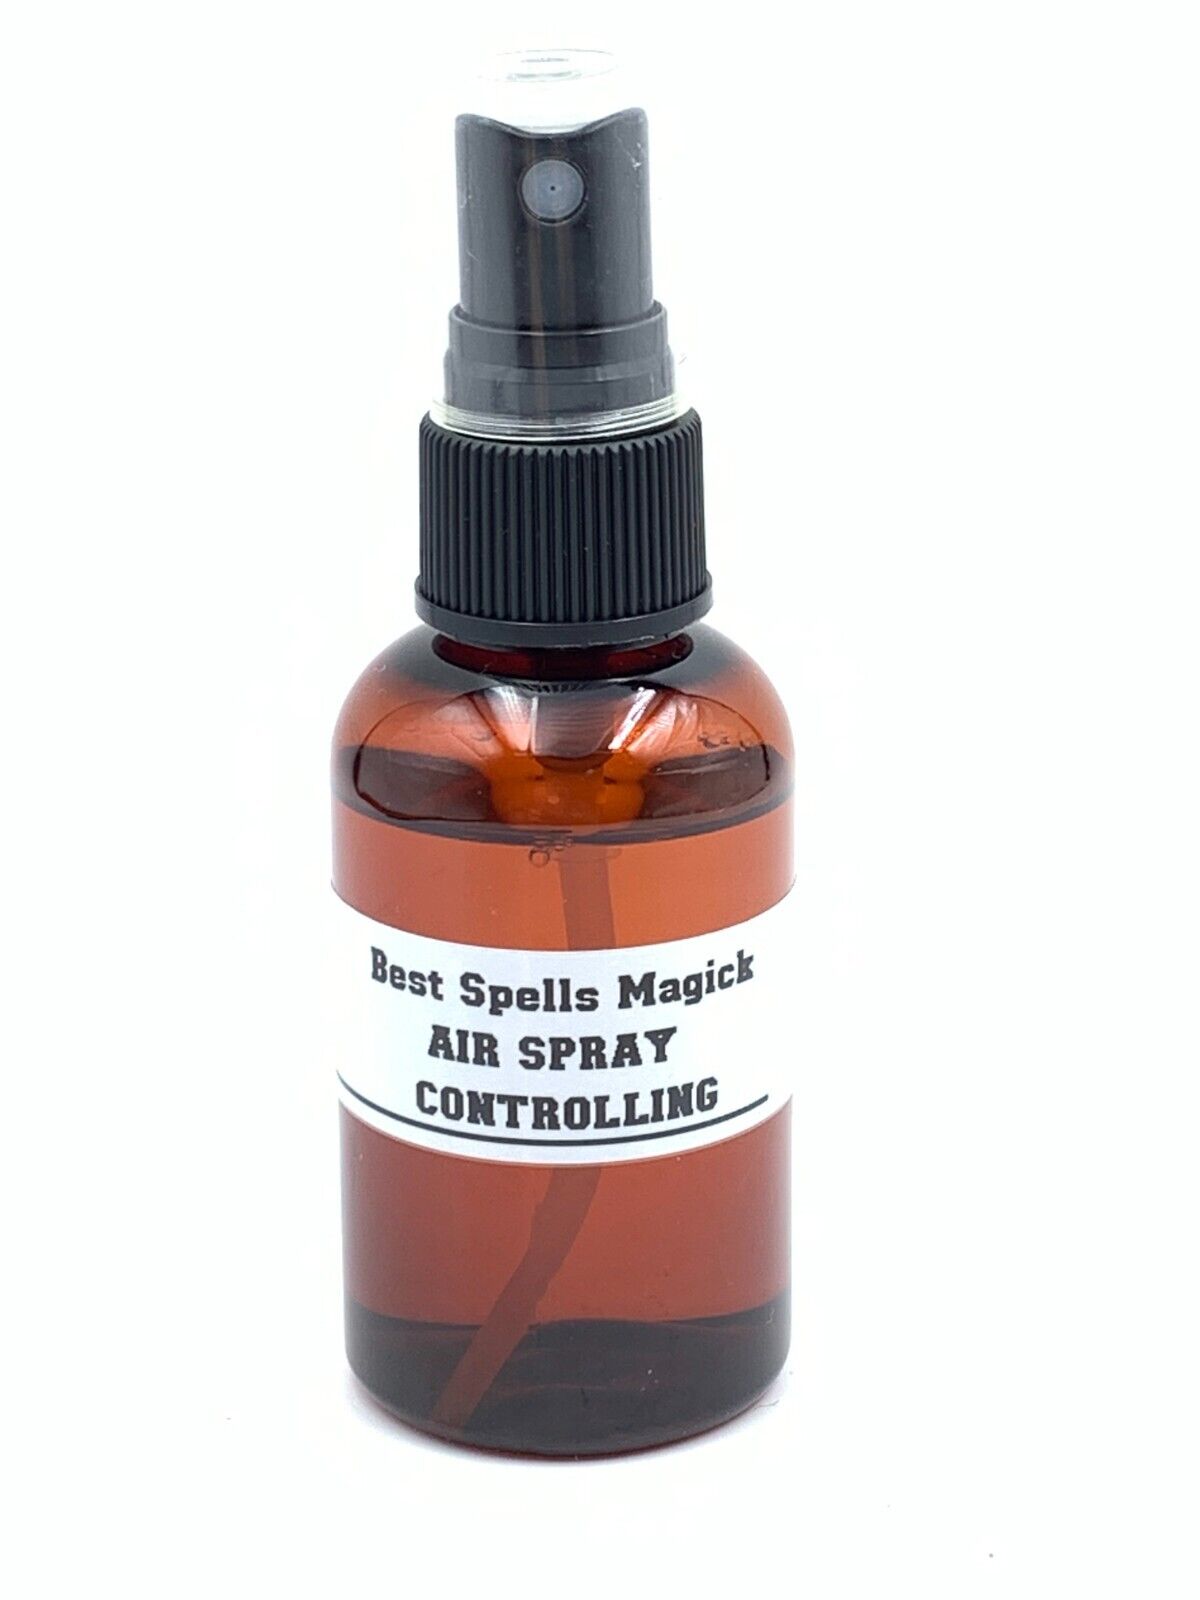 CONTROLLING Spell Booster Spiritual Air Spray/Handmade by Best Spells Magick